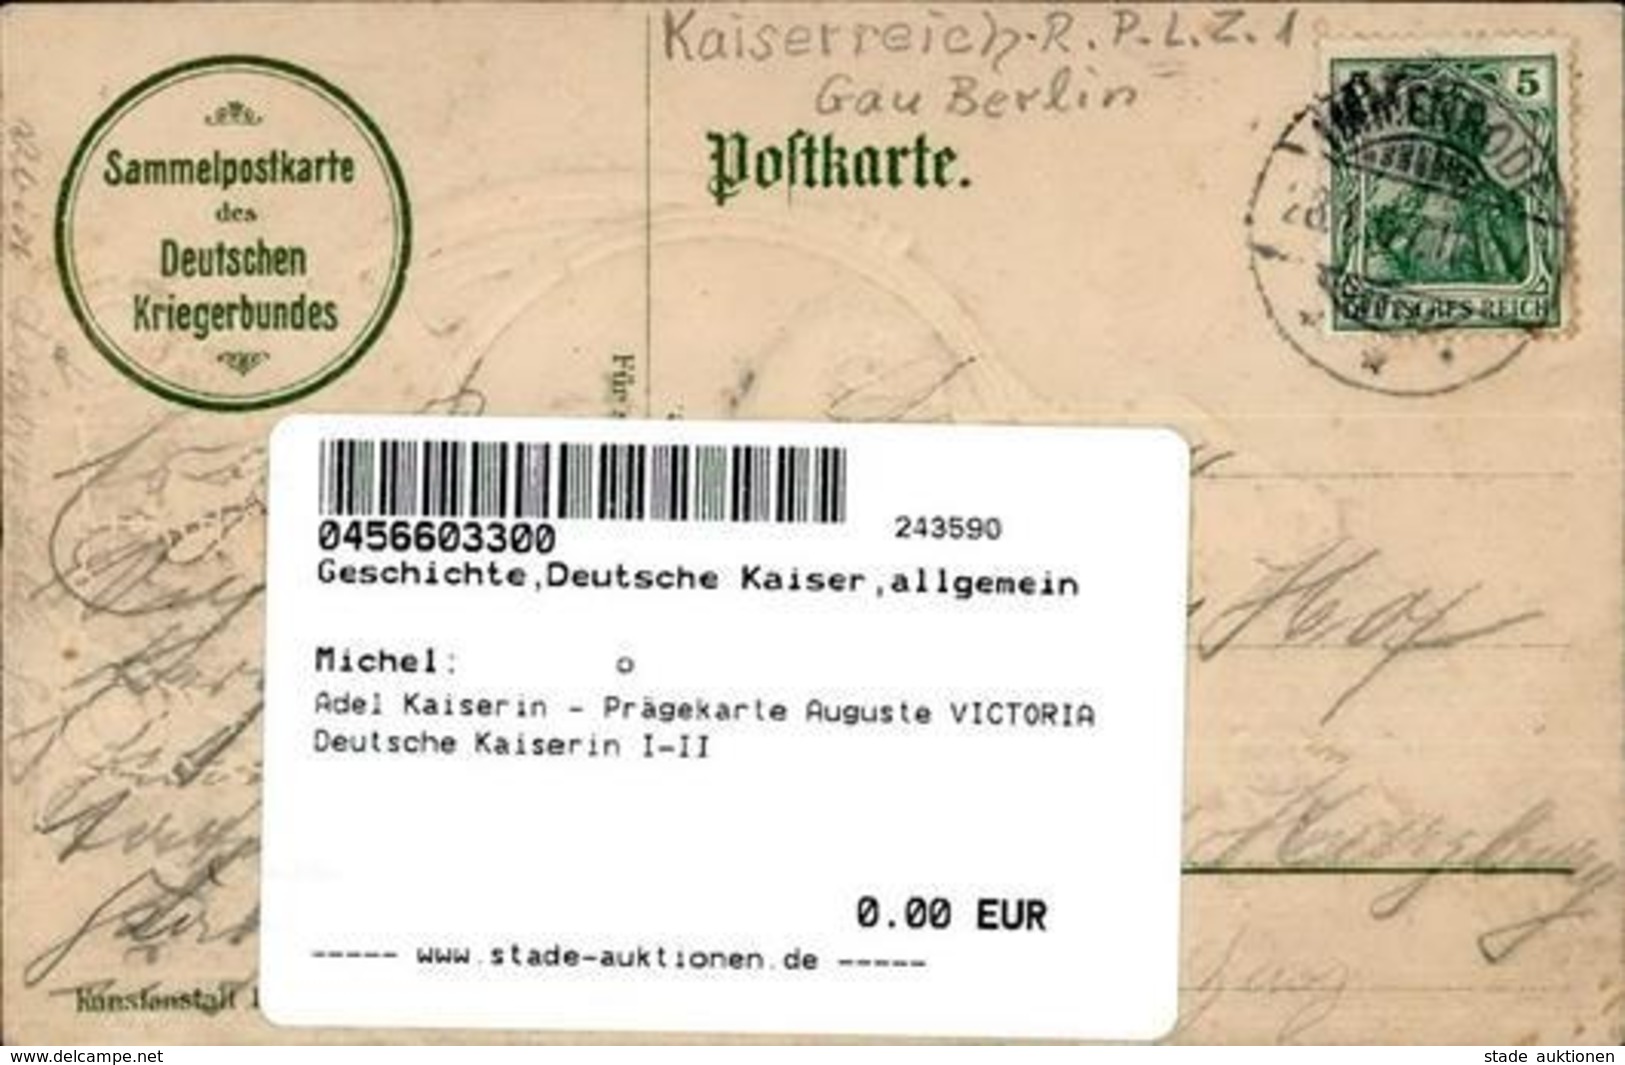 Adel Kaiserin - Prägekarte Auguste VICTORIA Deutsche Kaiserin I-II - Königshäuser